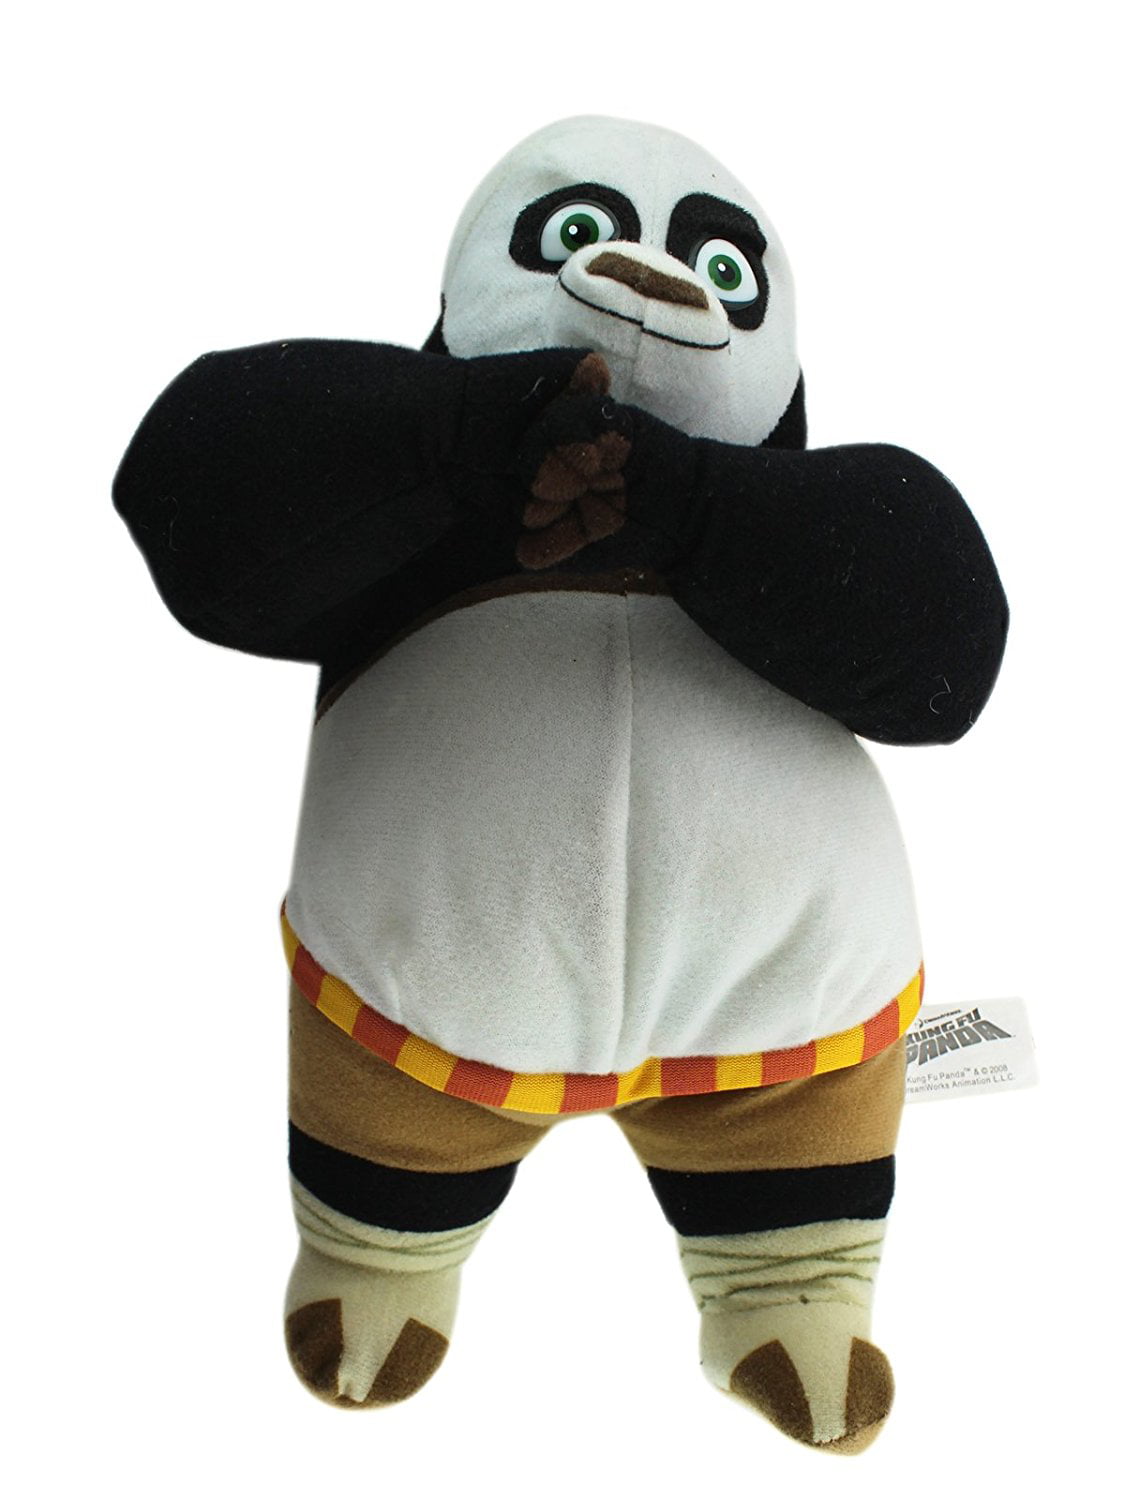 Best Of kung fu panda items Kung fu panda party, featuring po panda cake